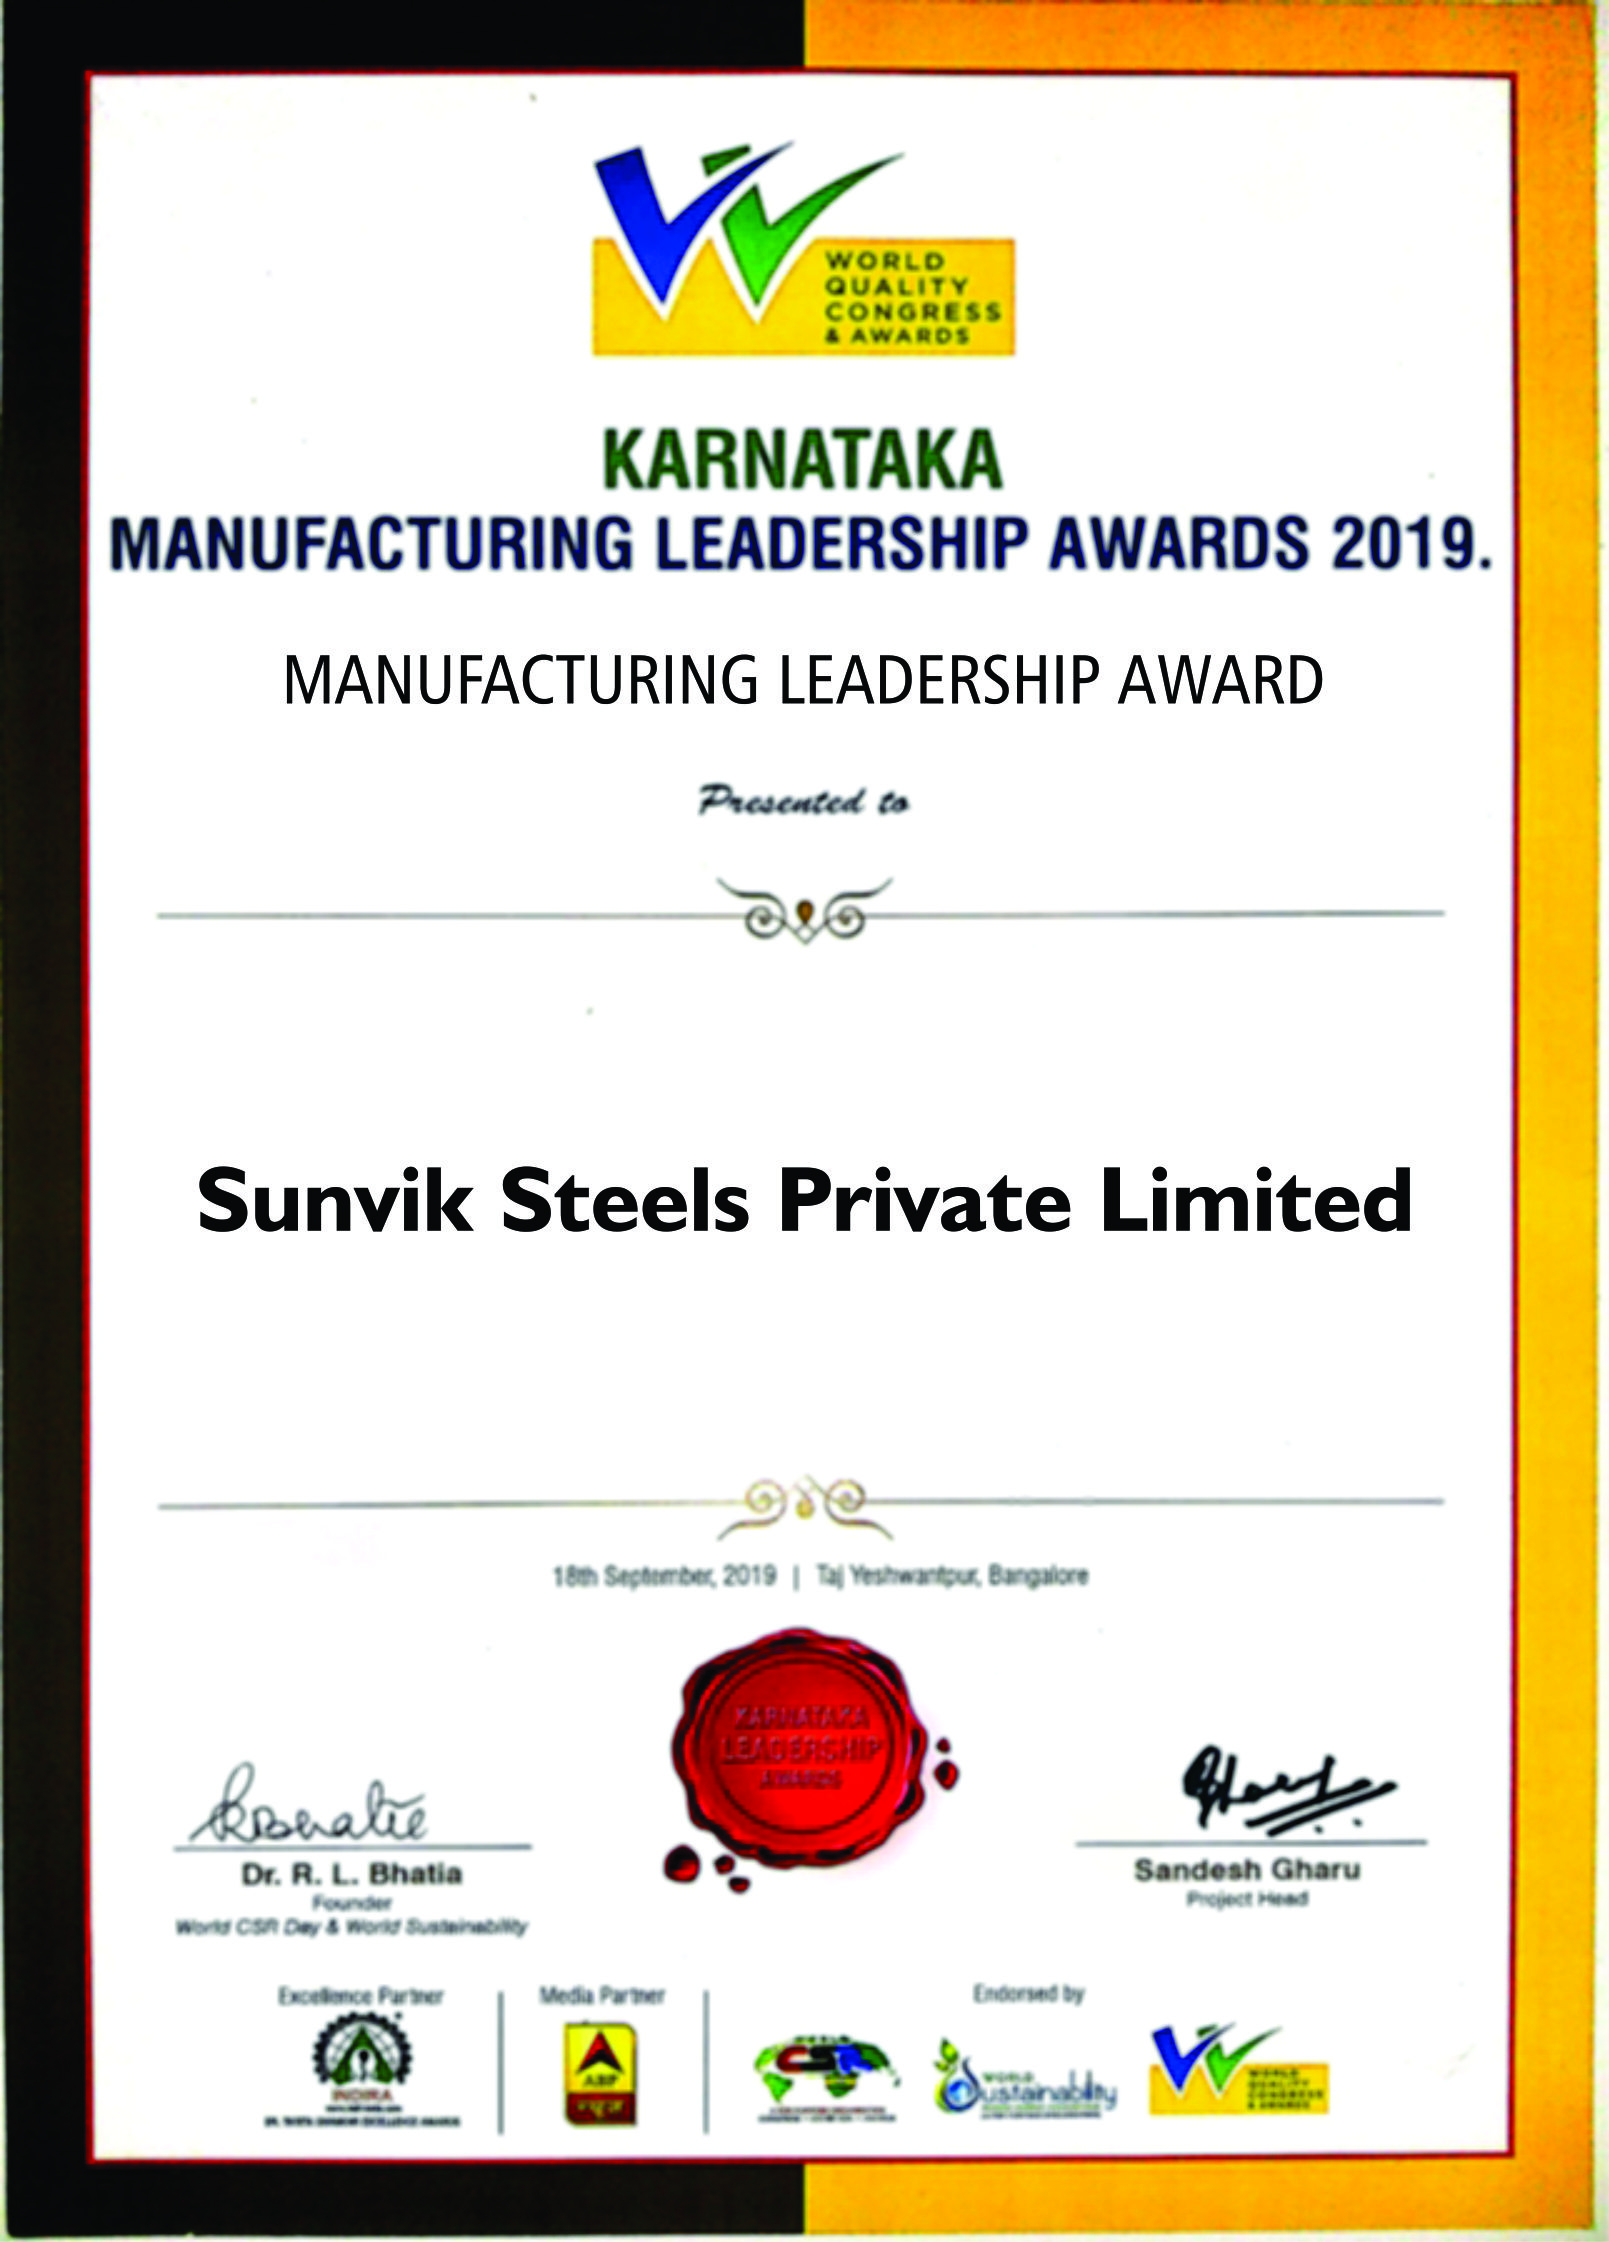 South India Manufacturing Leadership Awards 2019.